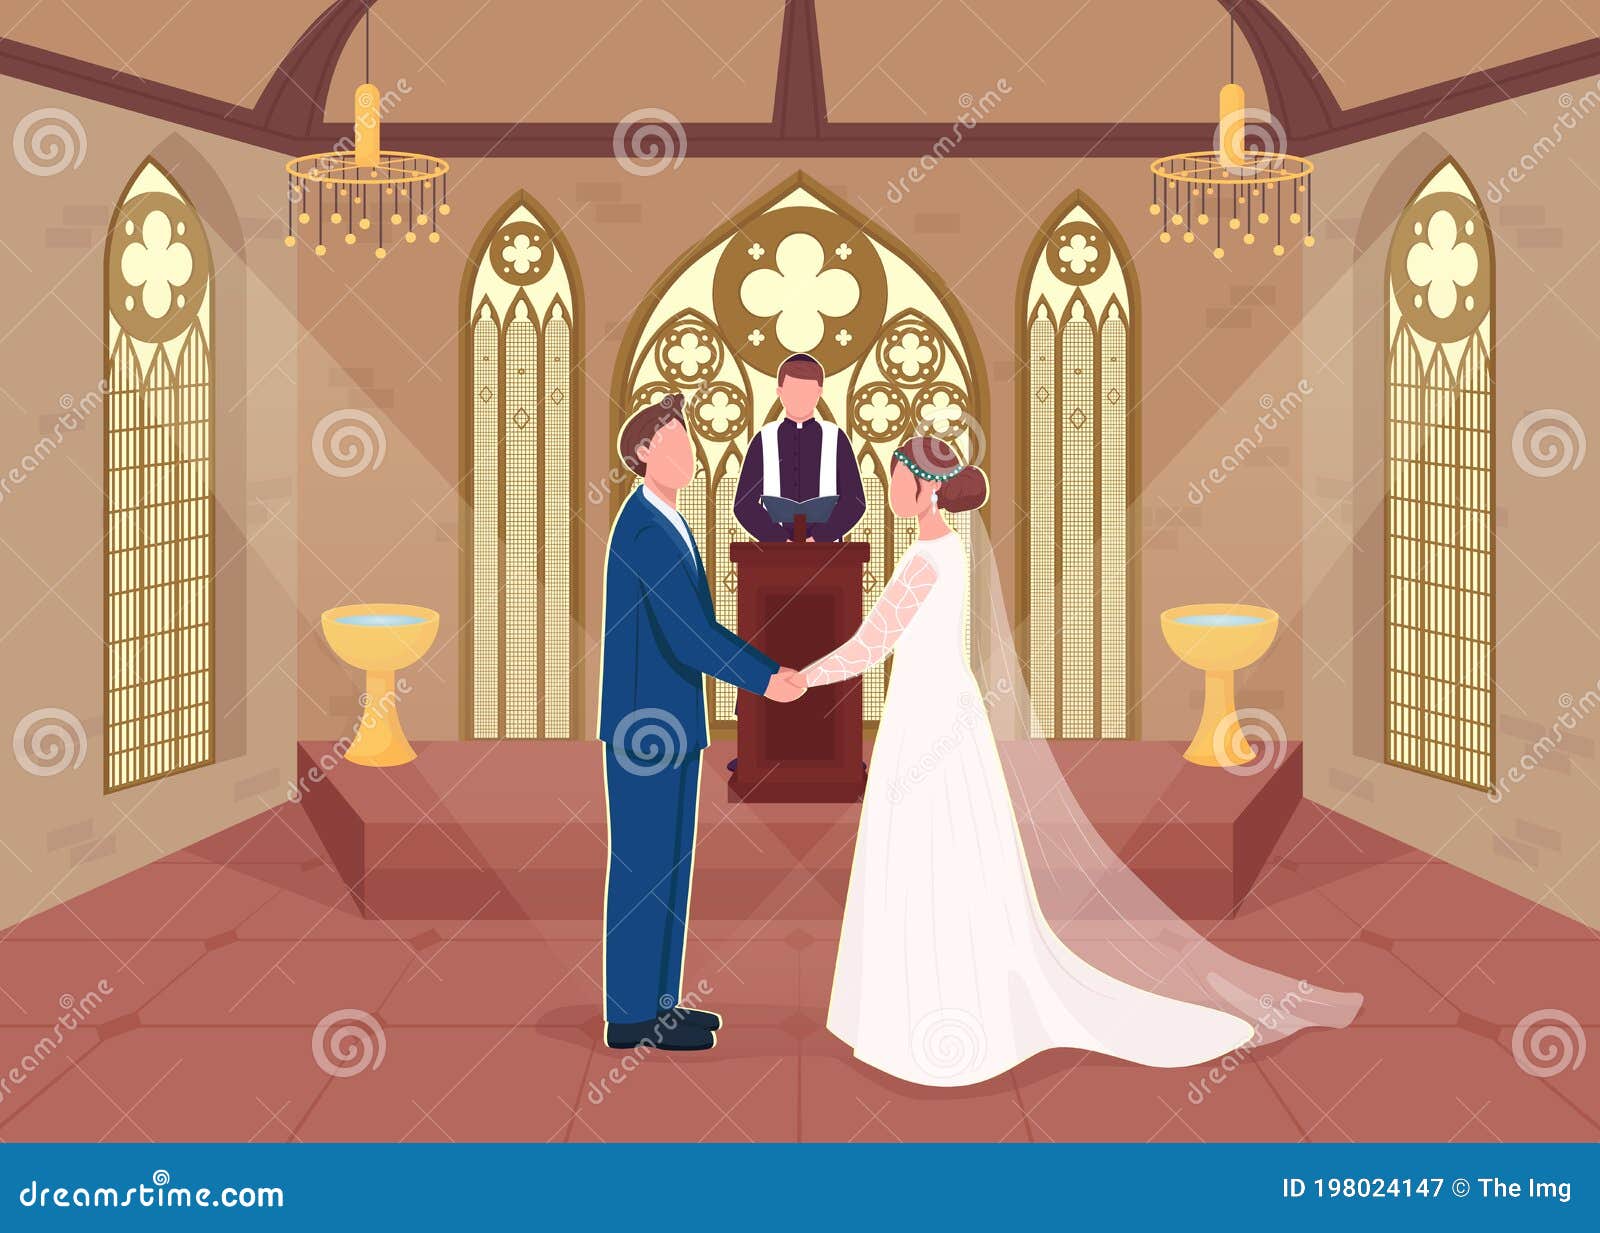 religious wedding ceremony flat color vector illustration religious wedding ceremony flat color vector illustration priest does 198024147